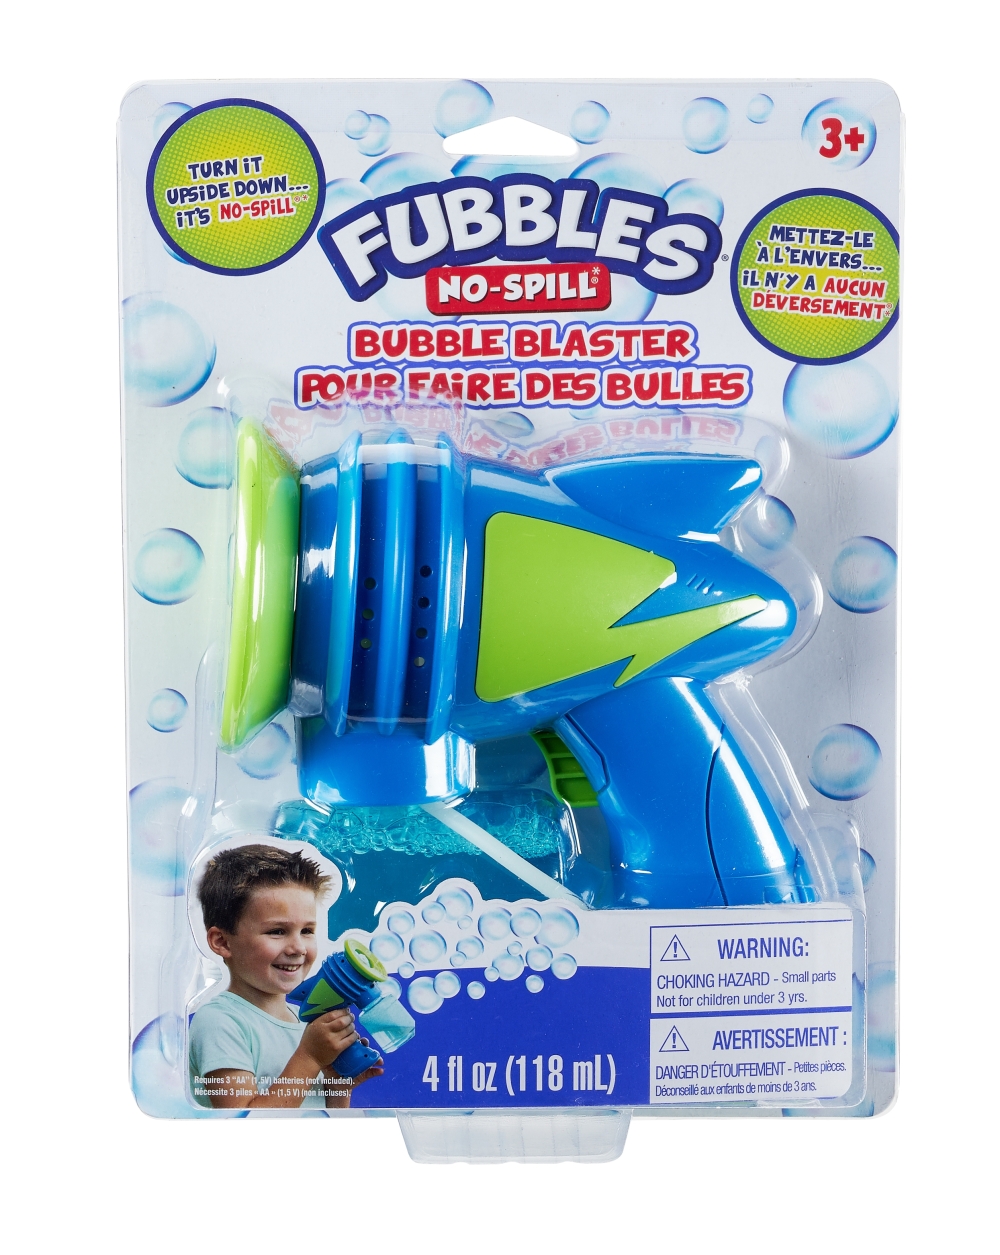 226 Fubbles® No-Spill® Bubble Blaster